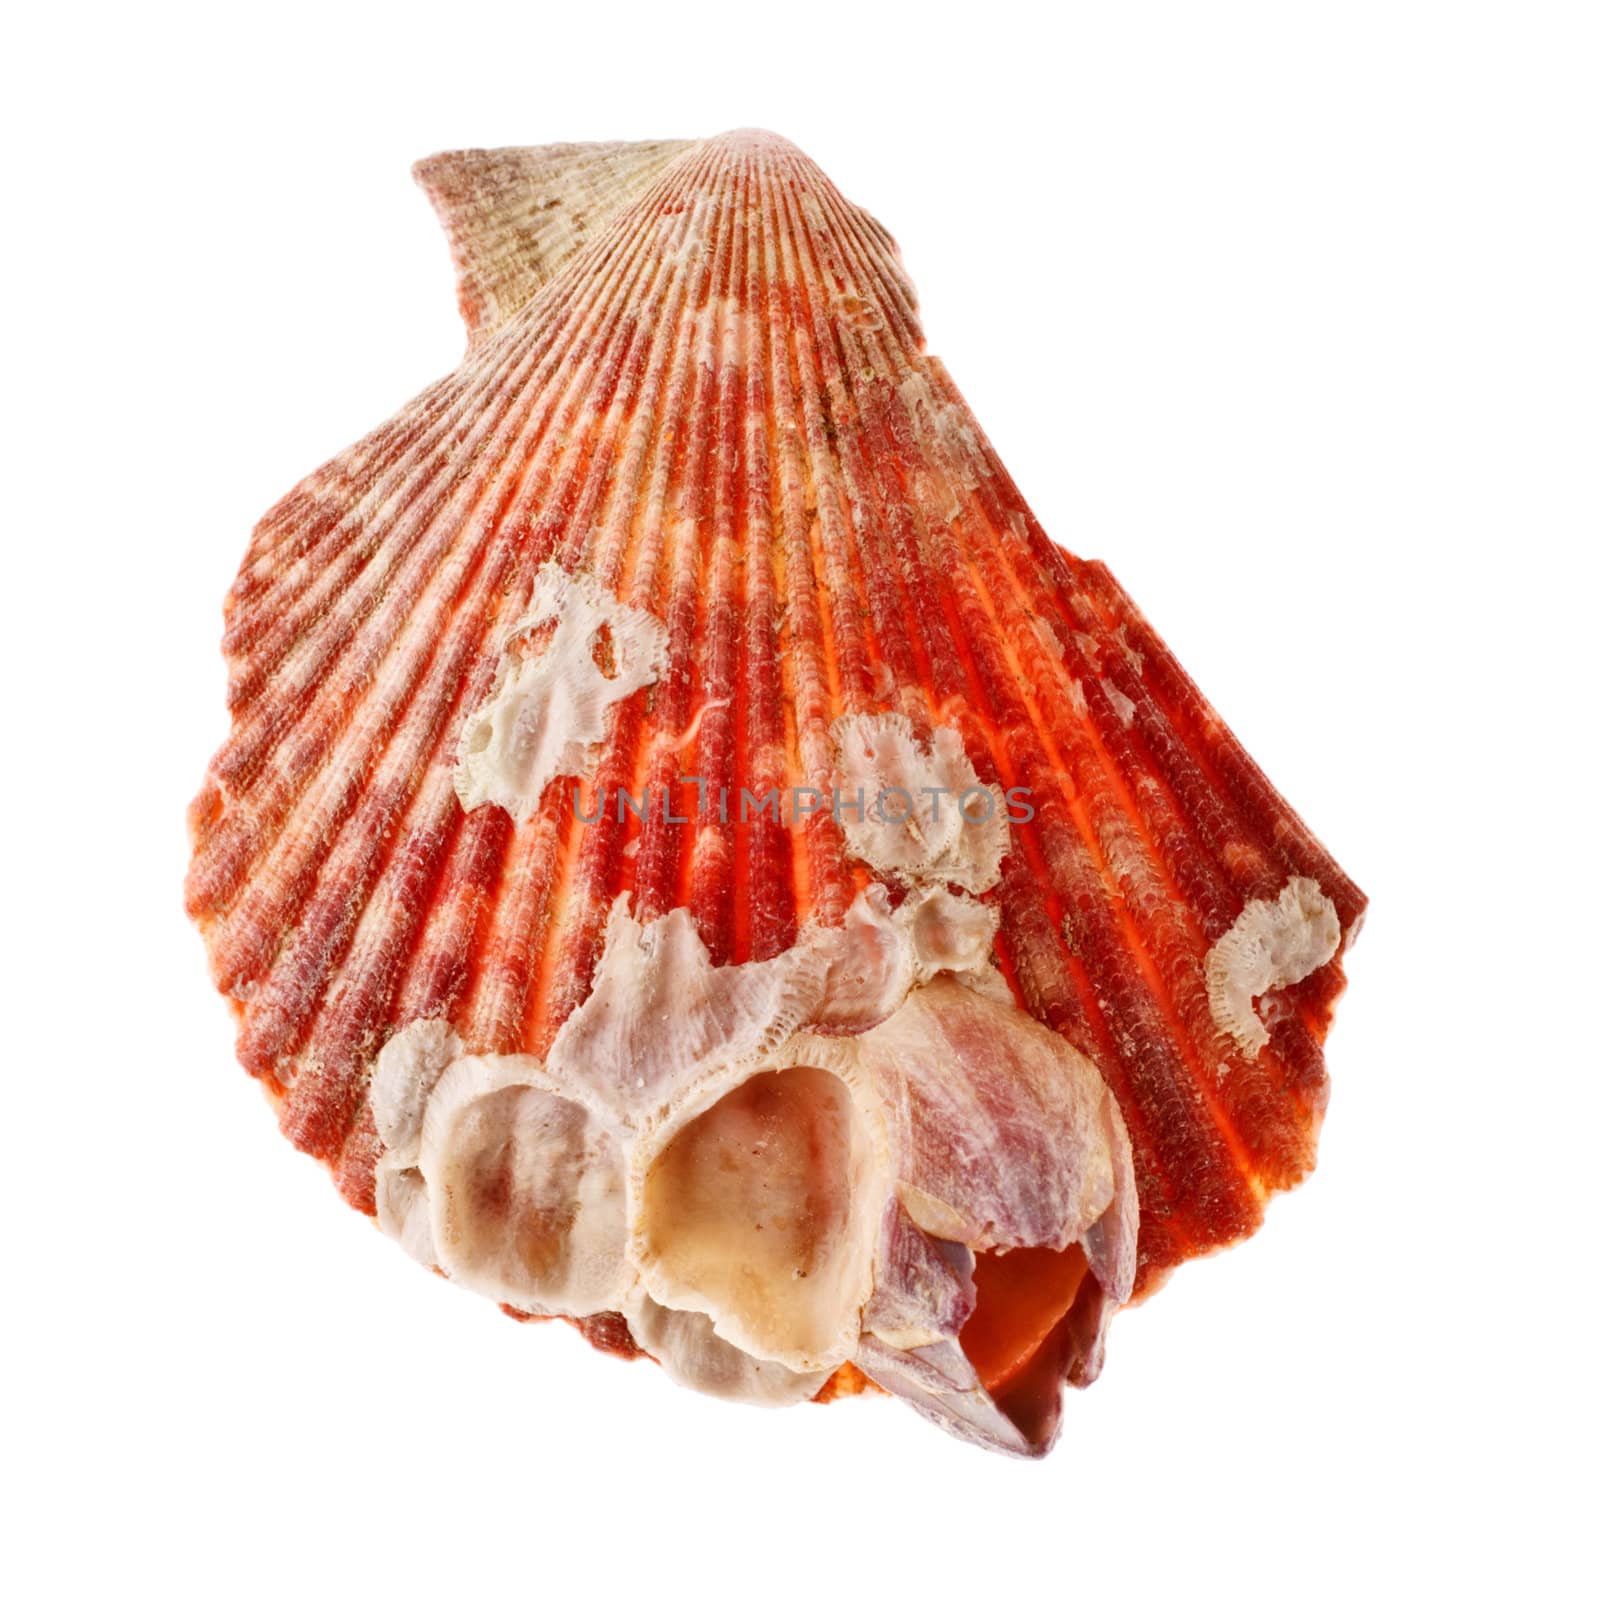 beauty radial seashell isolated on white background